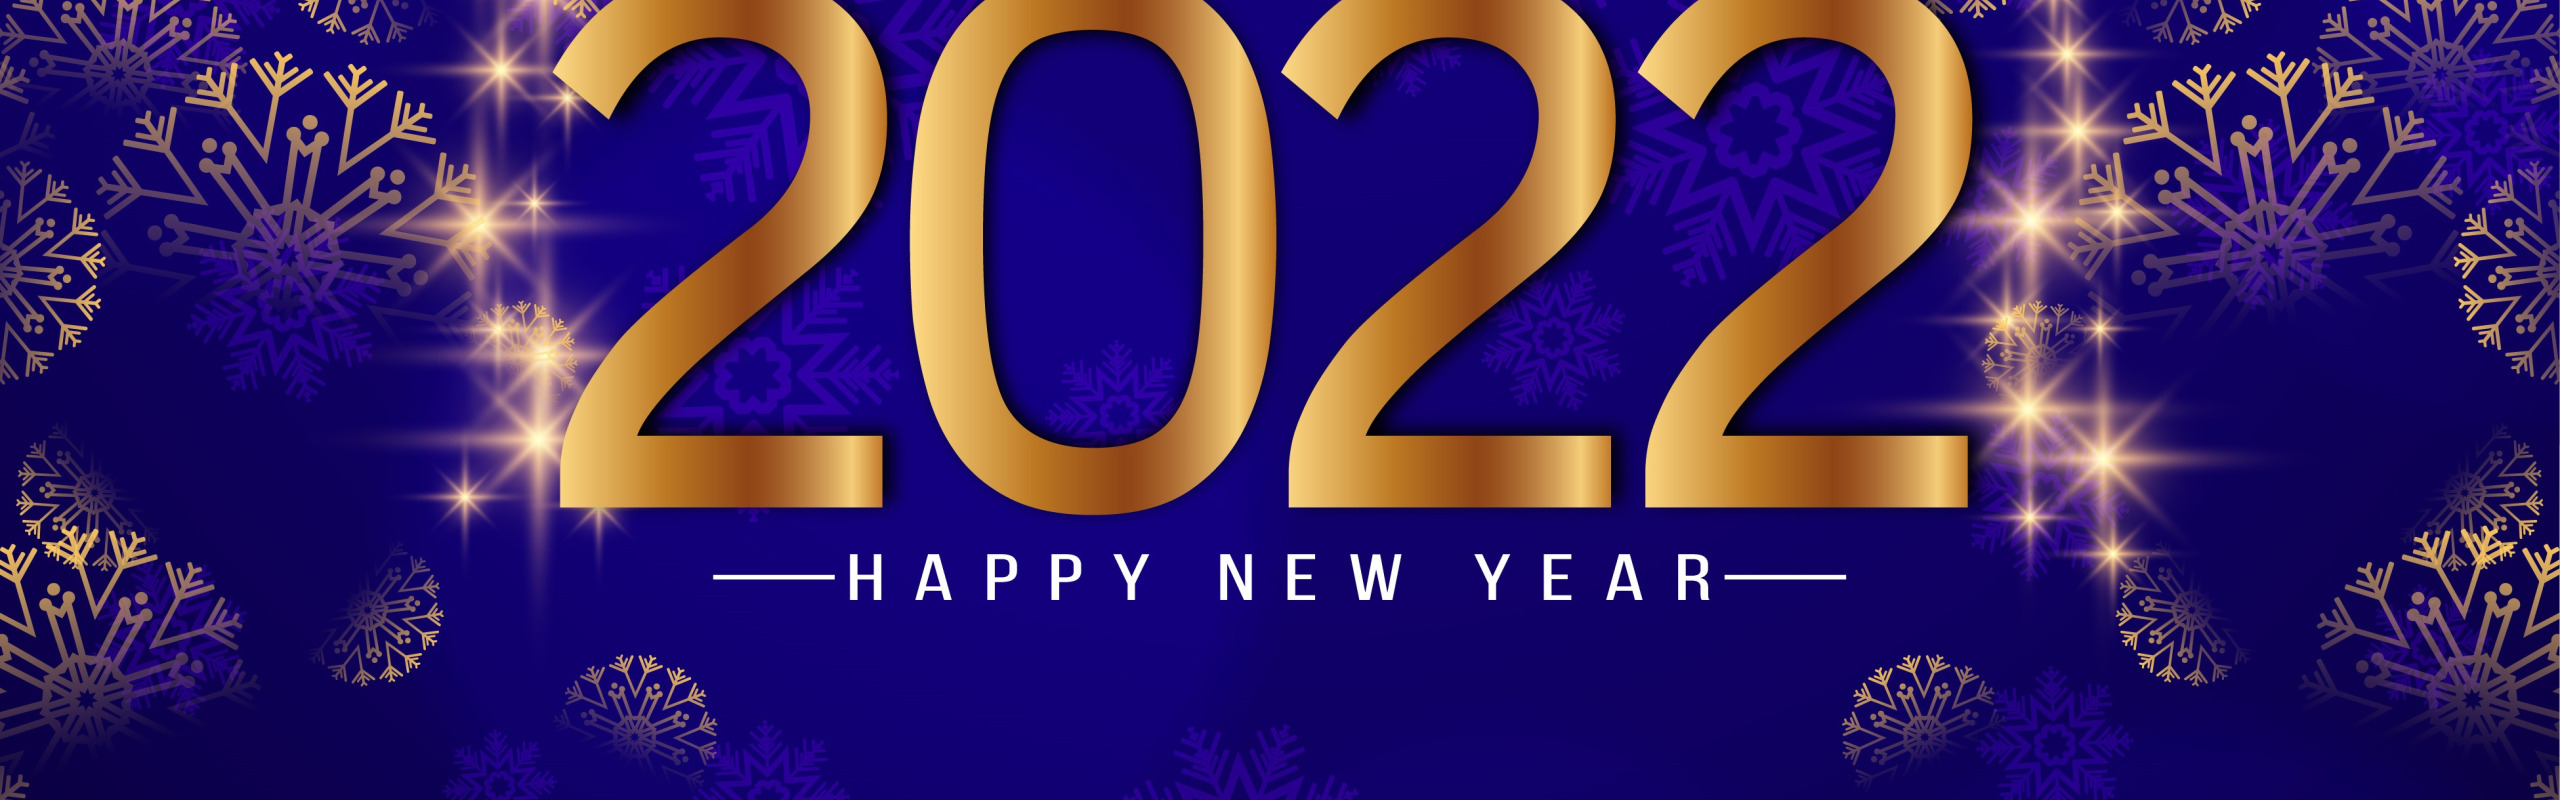 снежинки, золото, цифры, Новый год, golden, new year, happy, синий фон